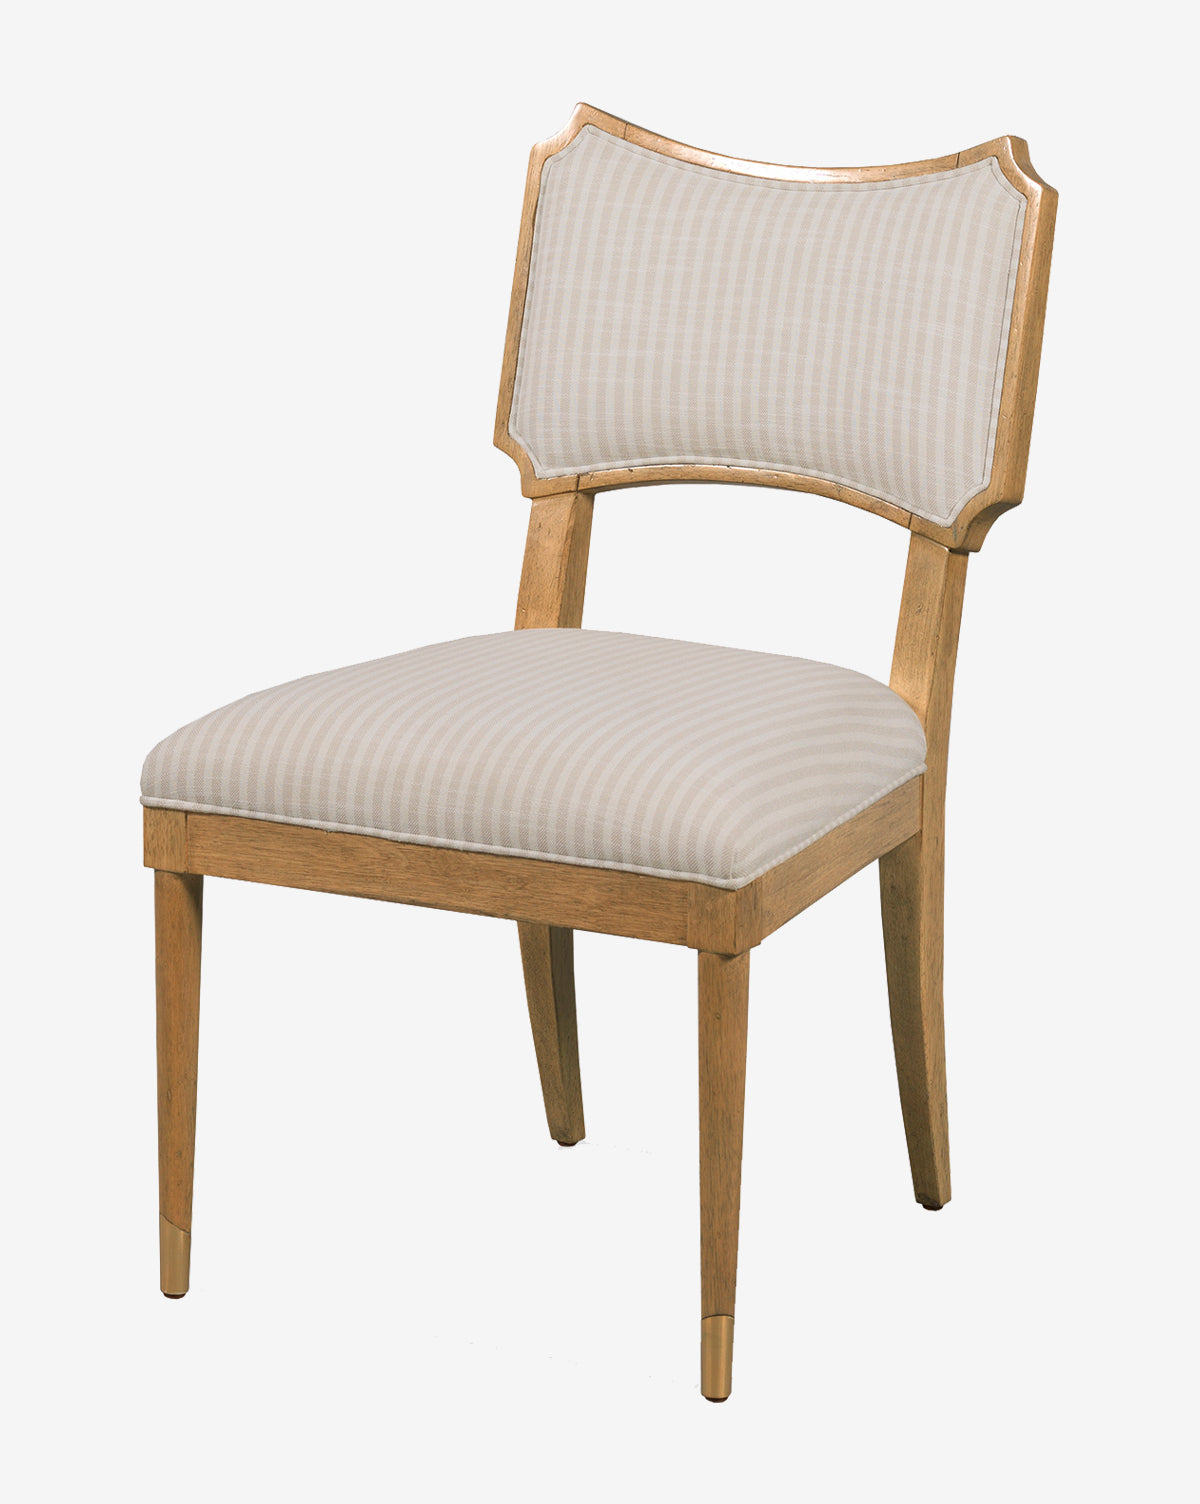 Woodbridge, Regan Chair